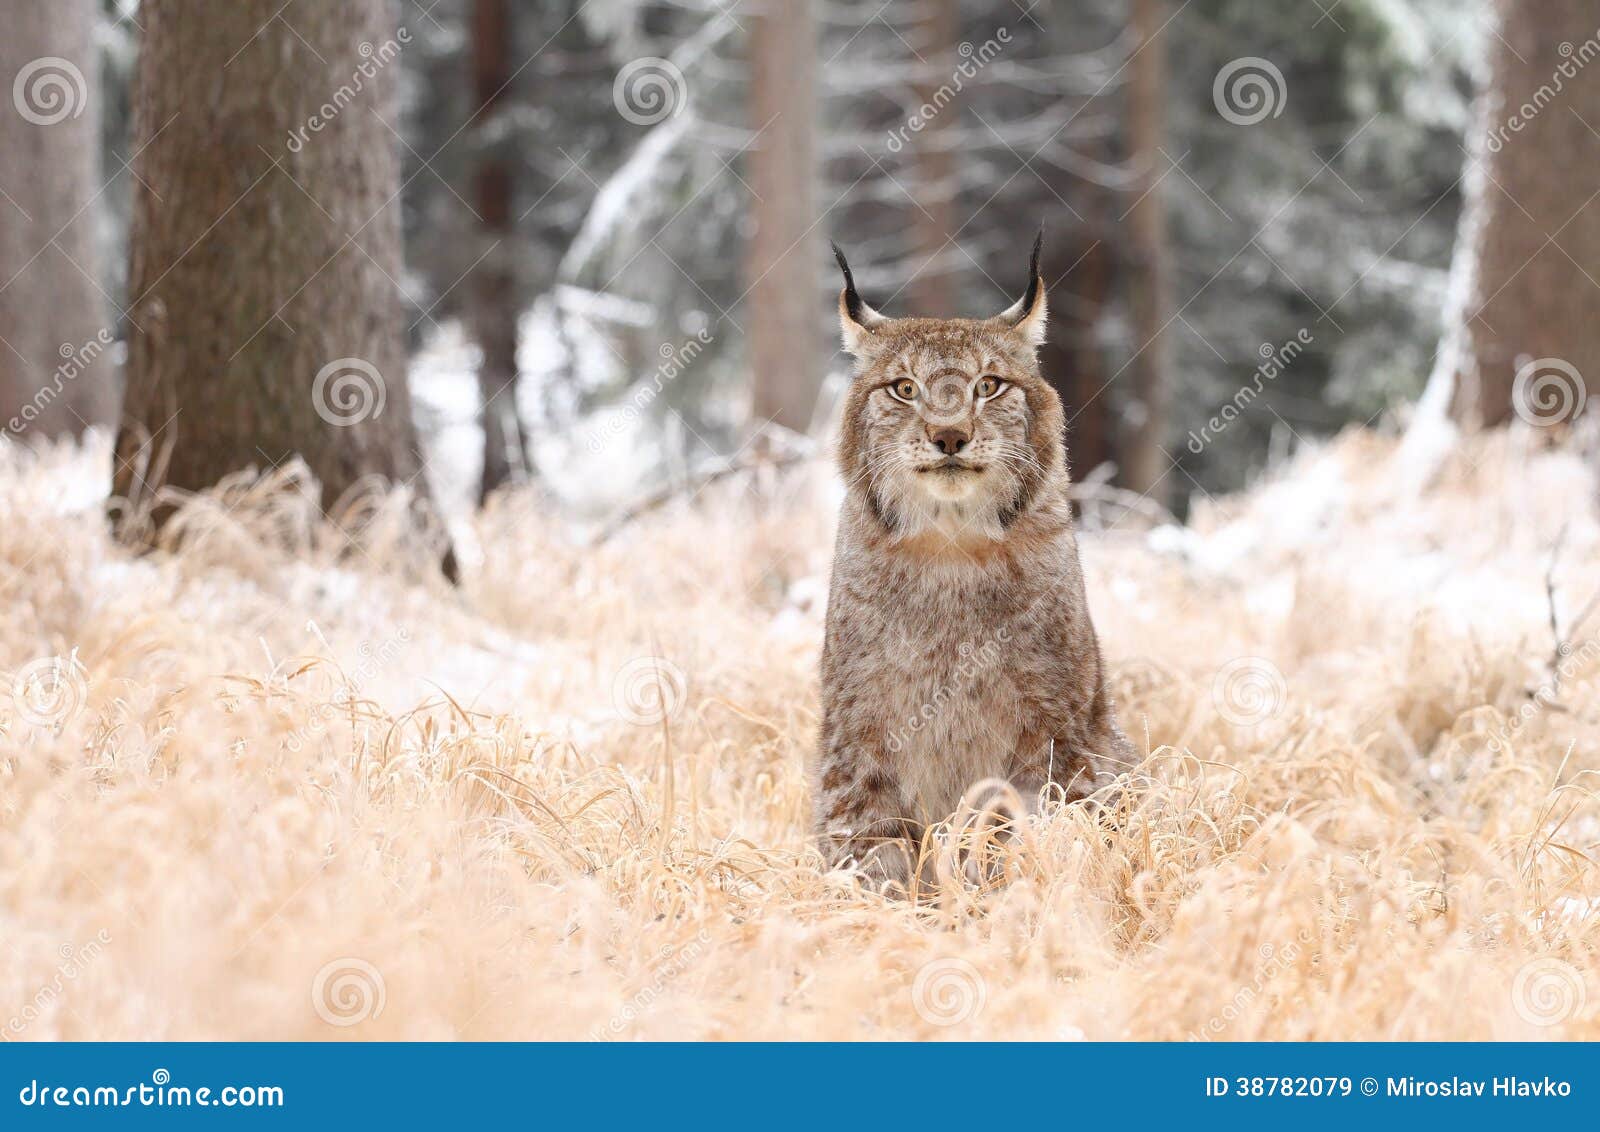 Lynx looking stock image. Image of elegant, snow, wild - 38782079